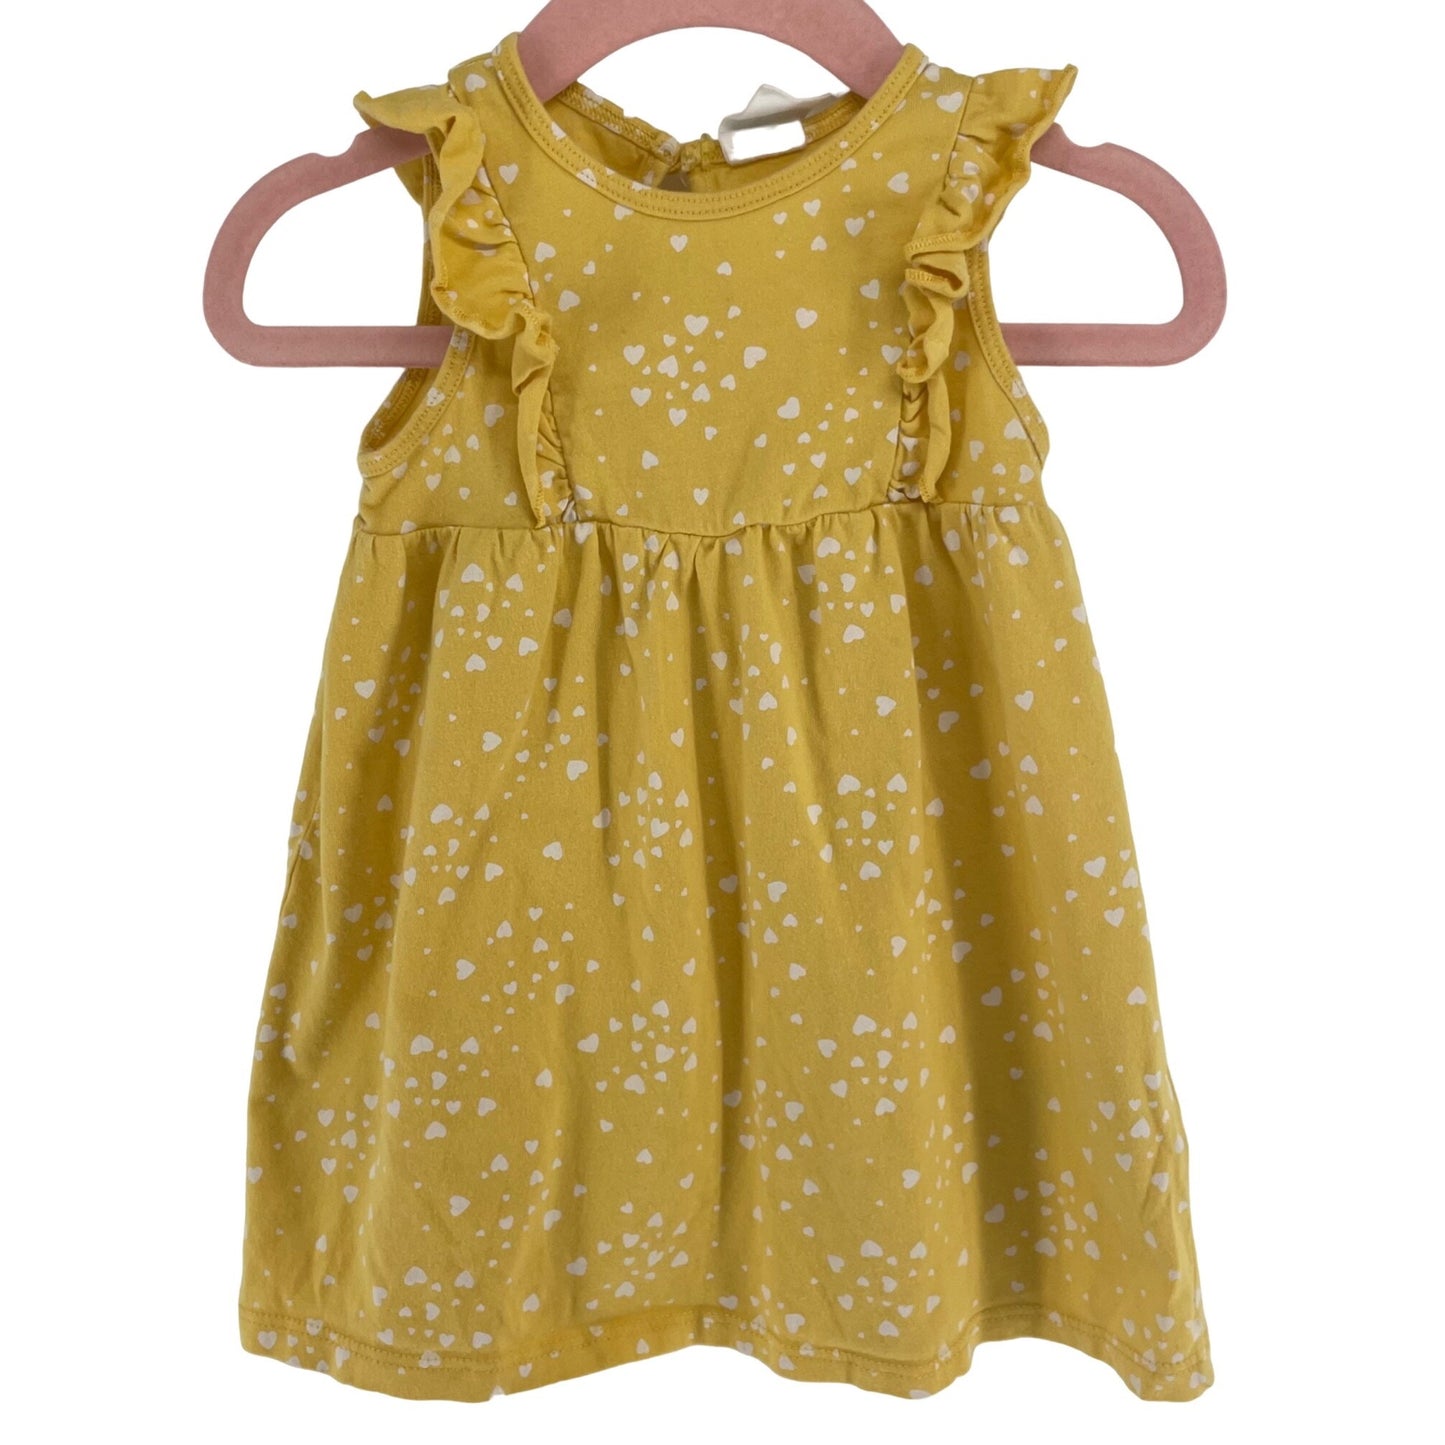 H&M Baby Girl's Size 9 Months Sleeveless Yellow & White Heart Polka Dot Dress